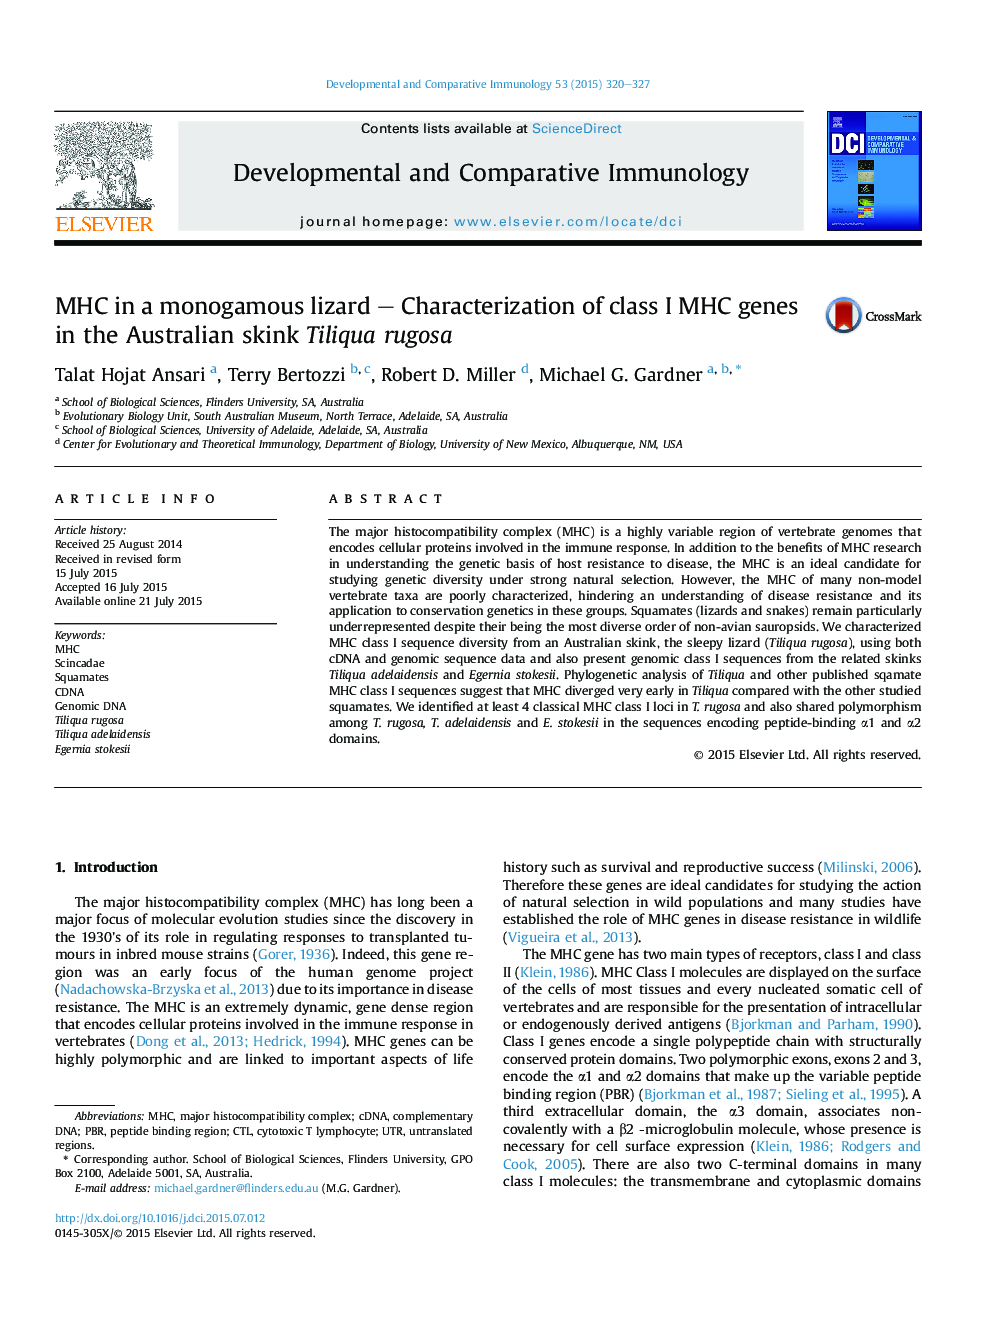 MHC in a monogamous lizard – Characterization of class I MHC genes in the Australian skink Tiliqua rugosa